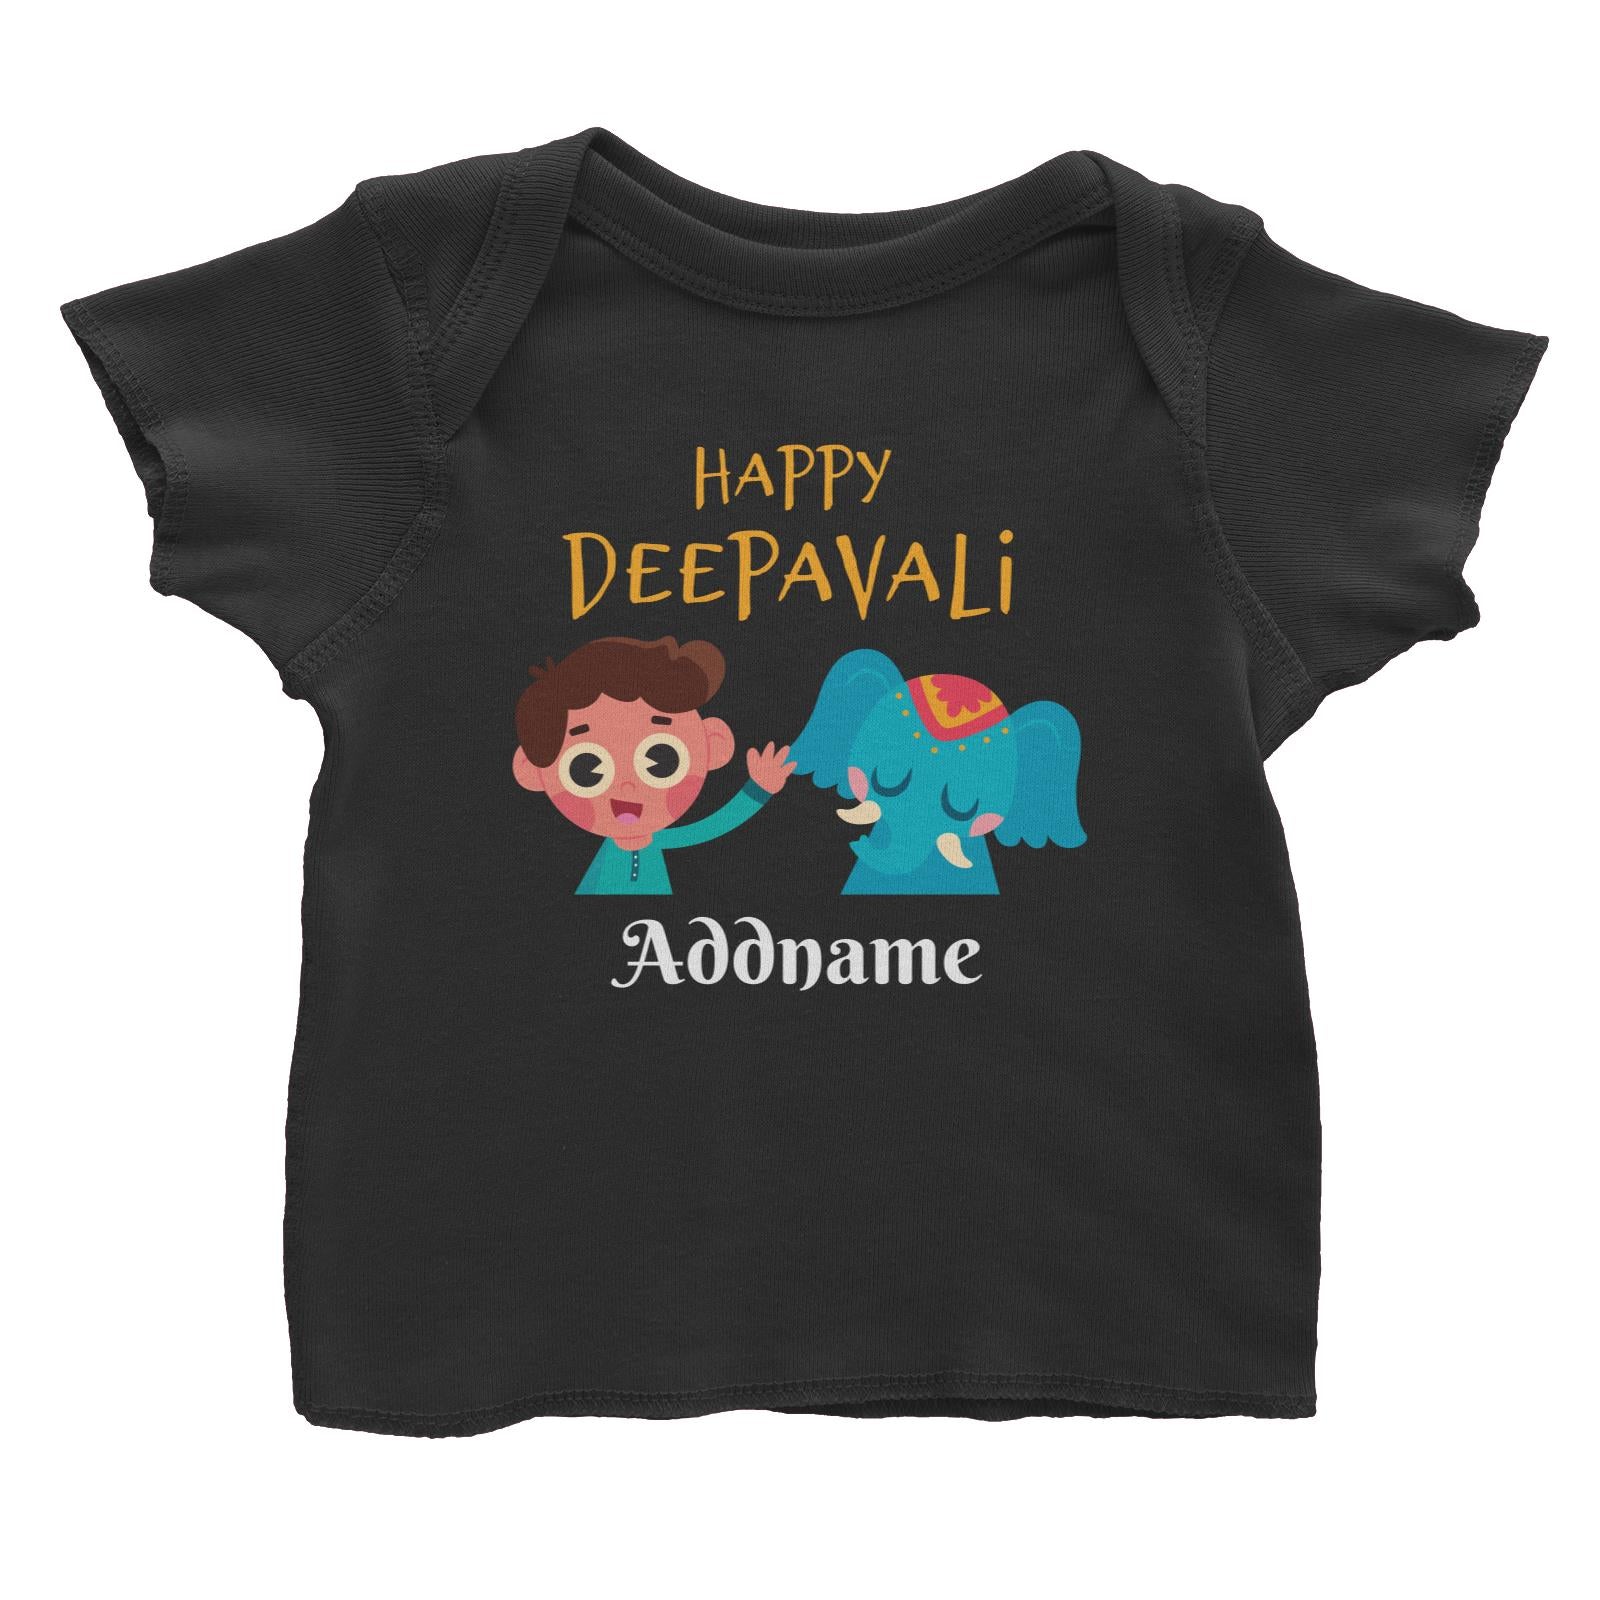 Deepavali Series Little Boy Wishes You Happy Deepavali Baby T-Shirt